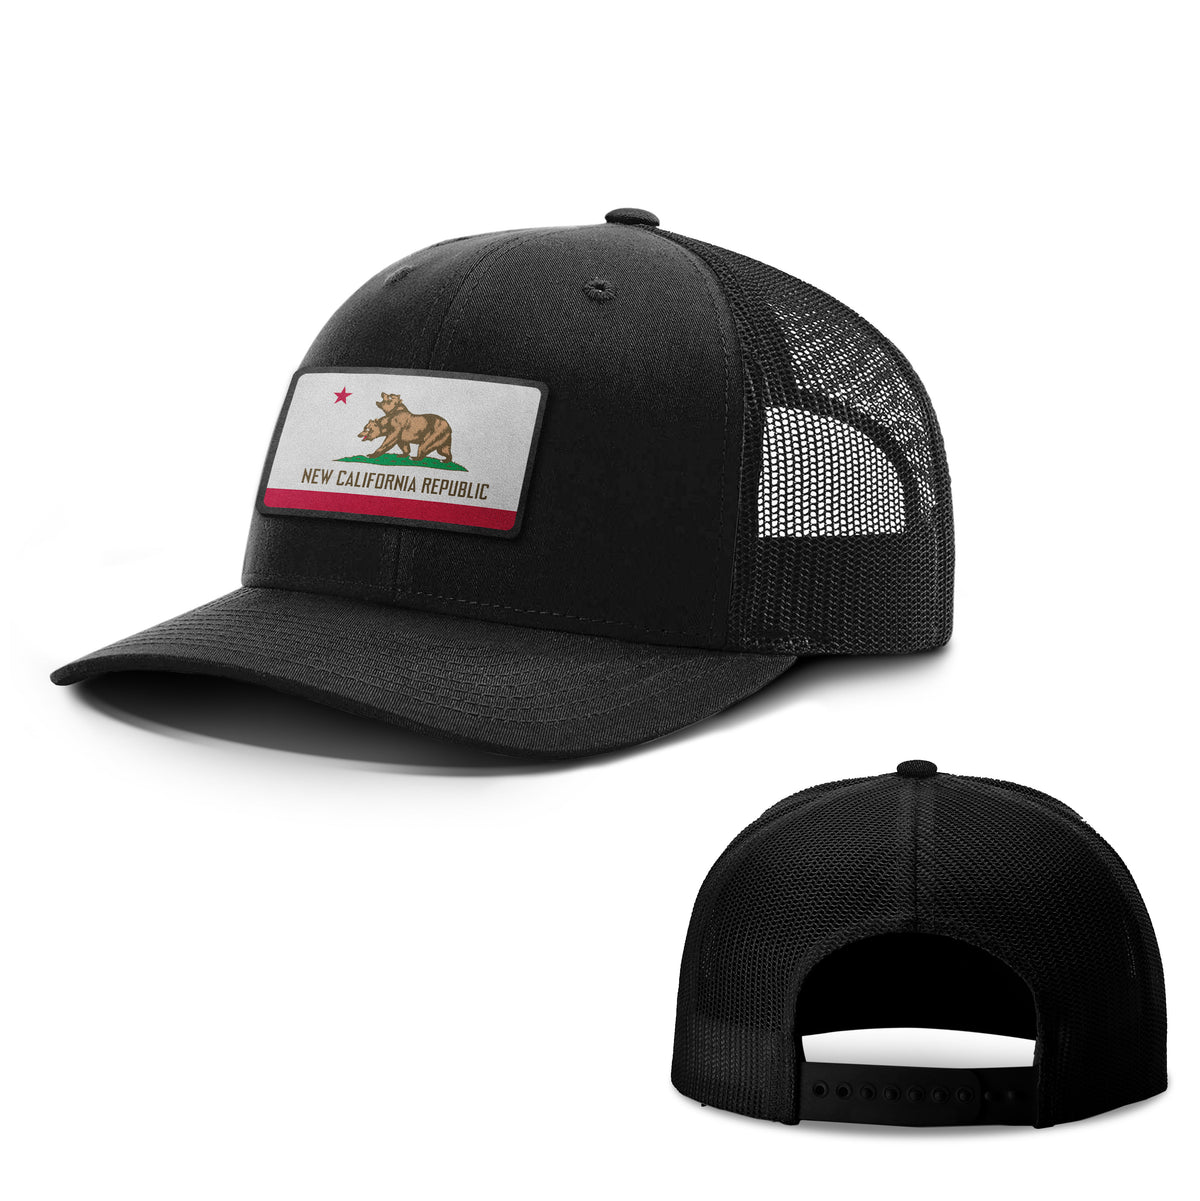 New California Republic Patch Hats